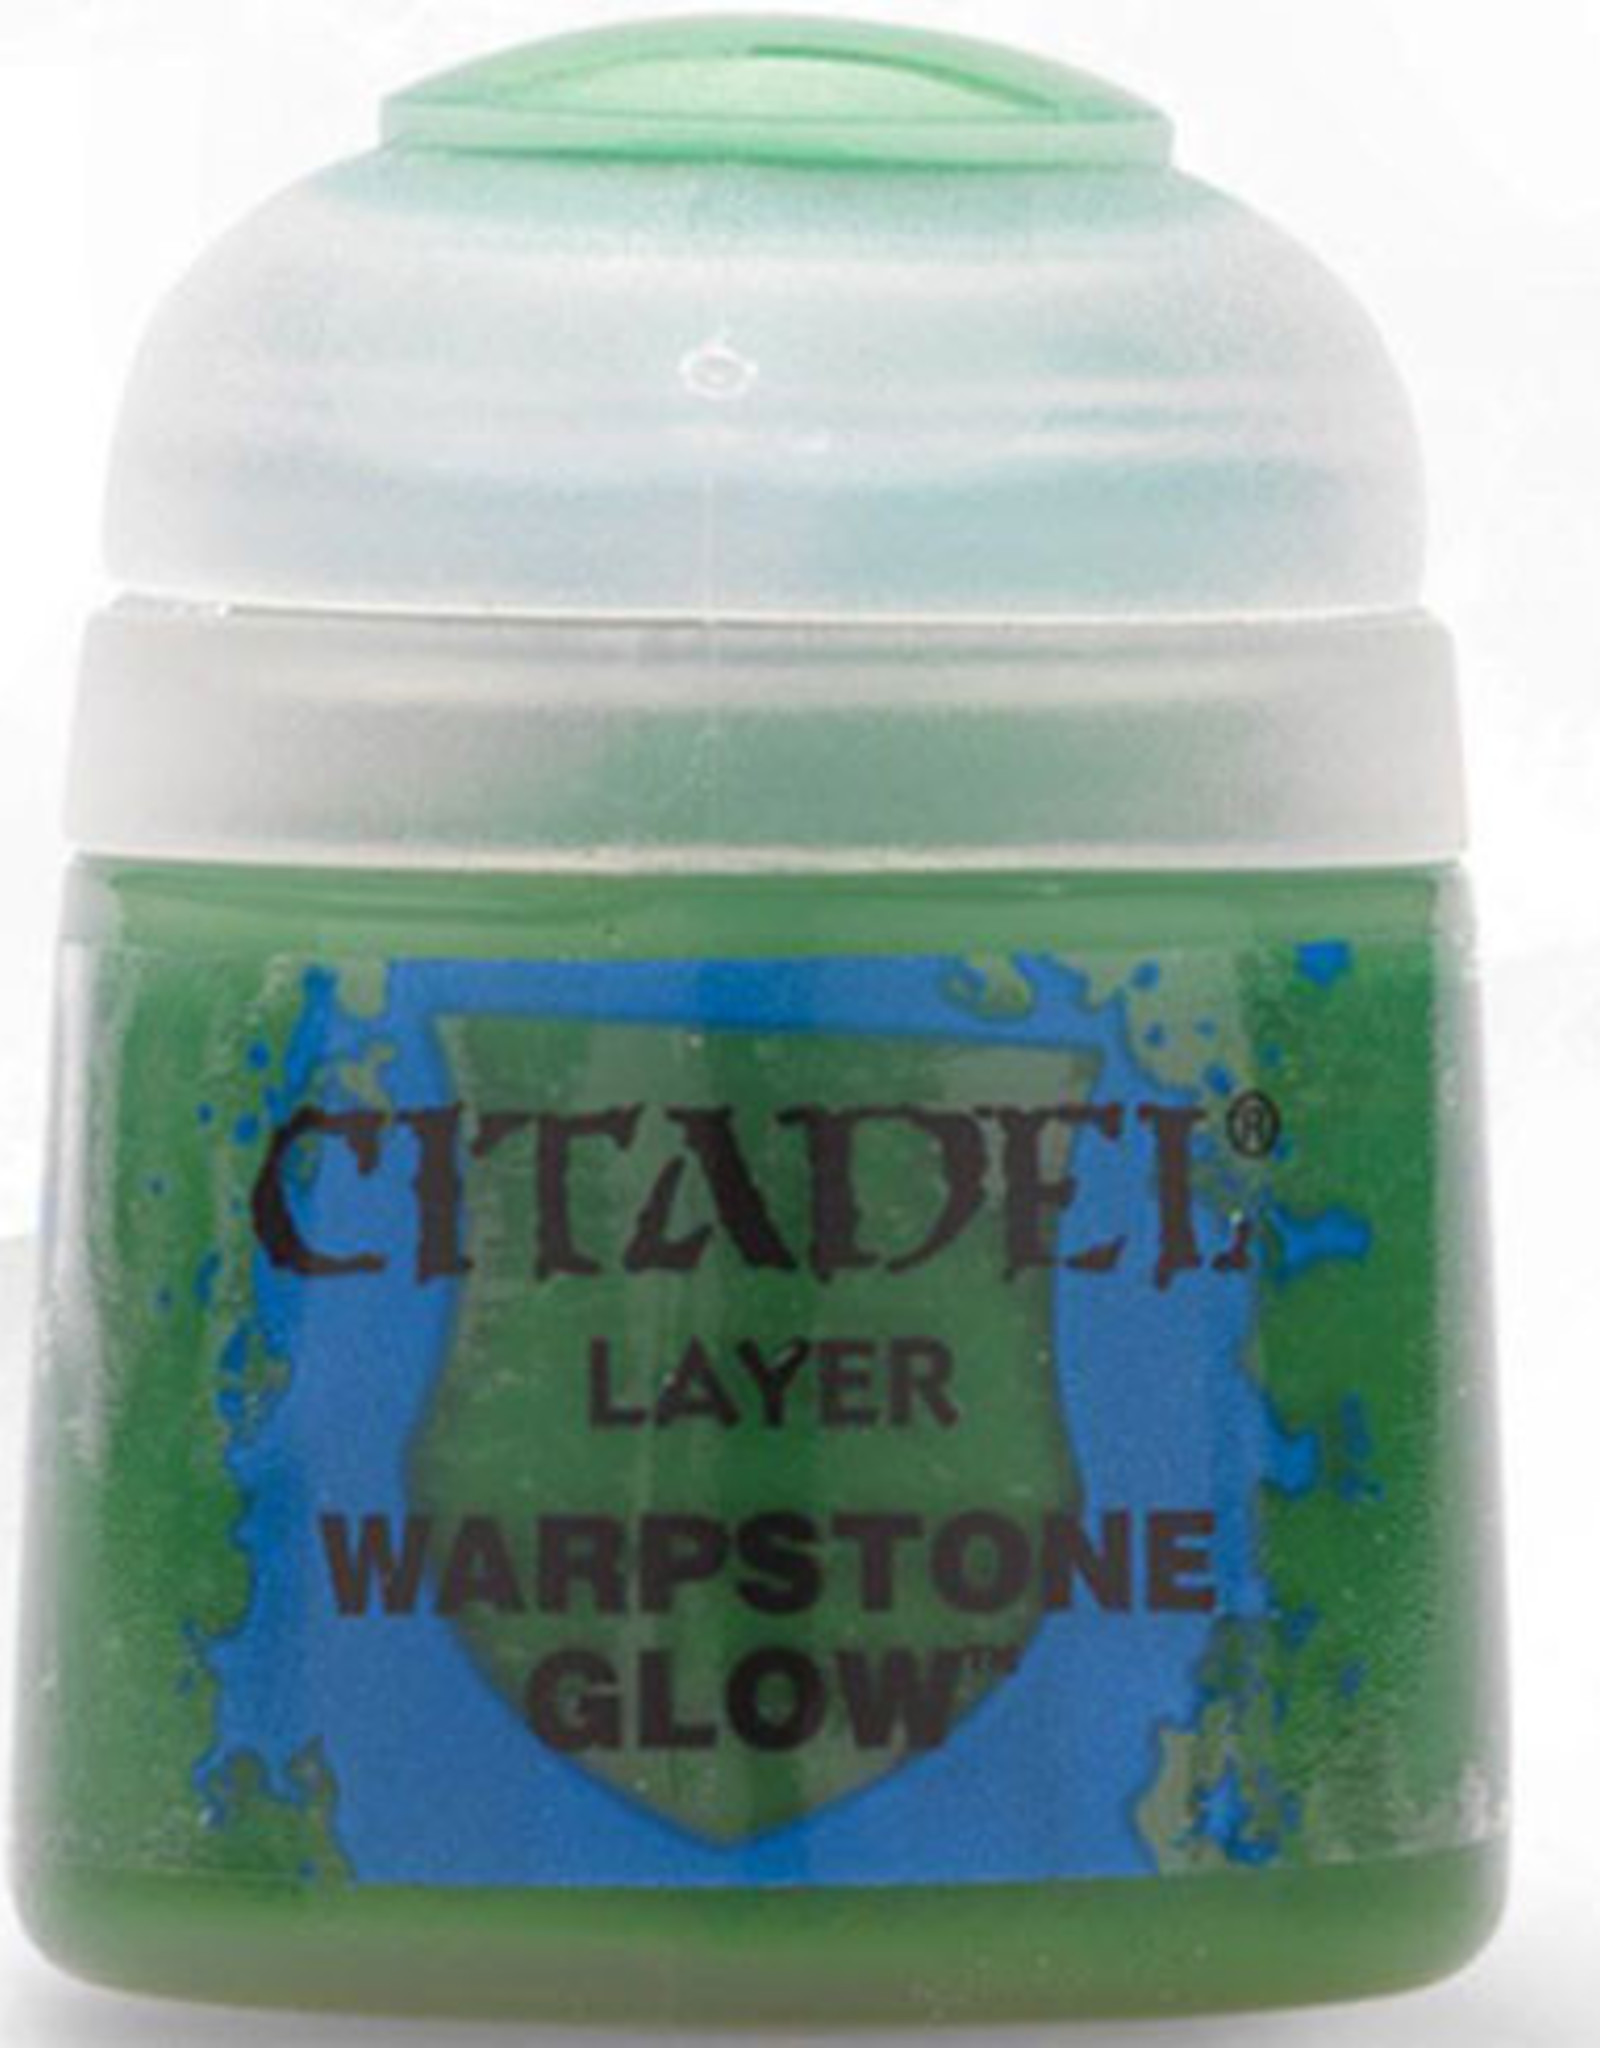 Games Workshop Citadel Layer: Warpstone Glow